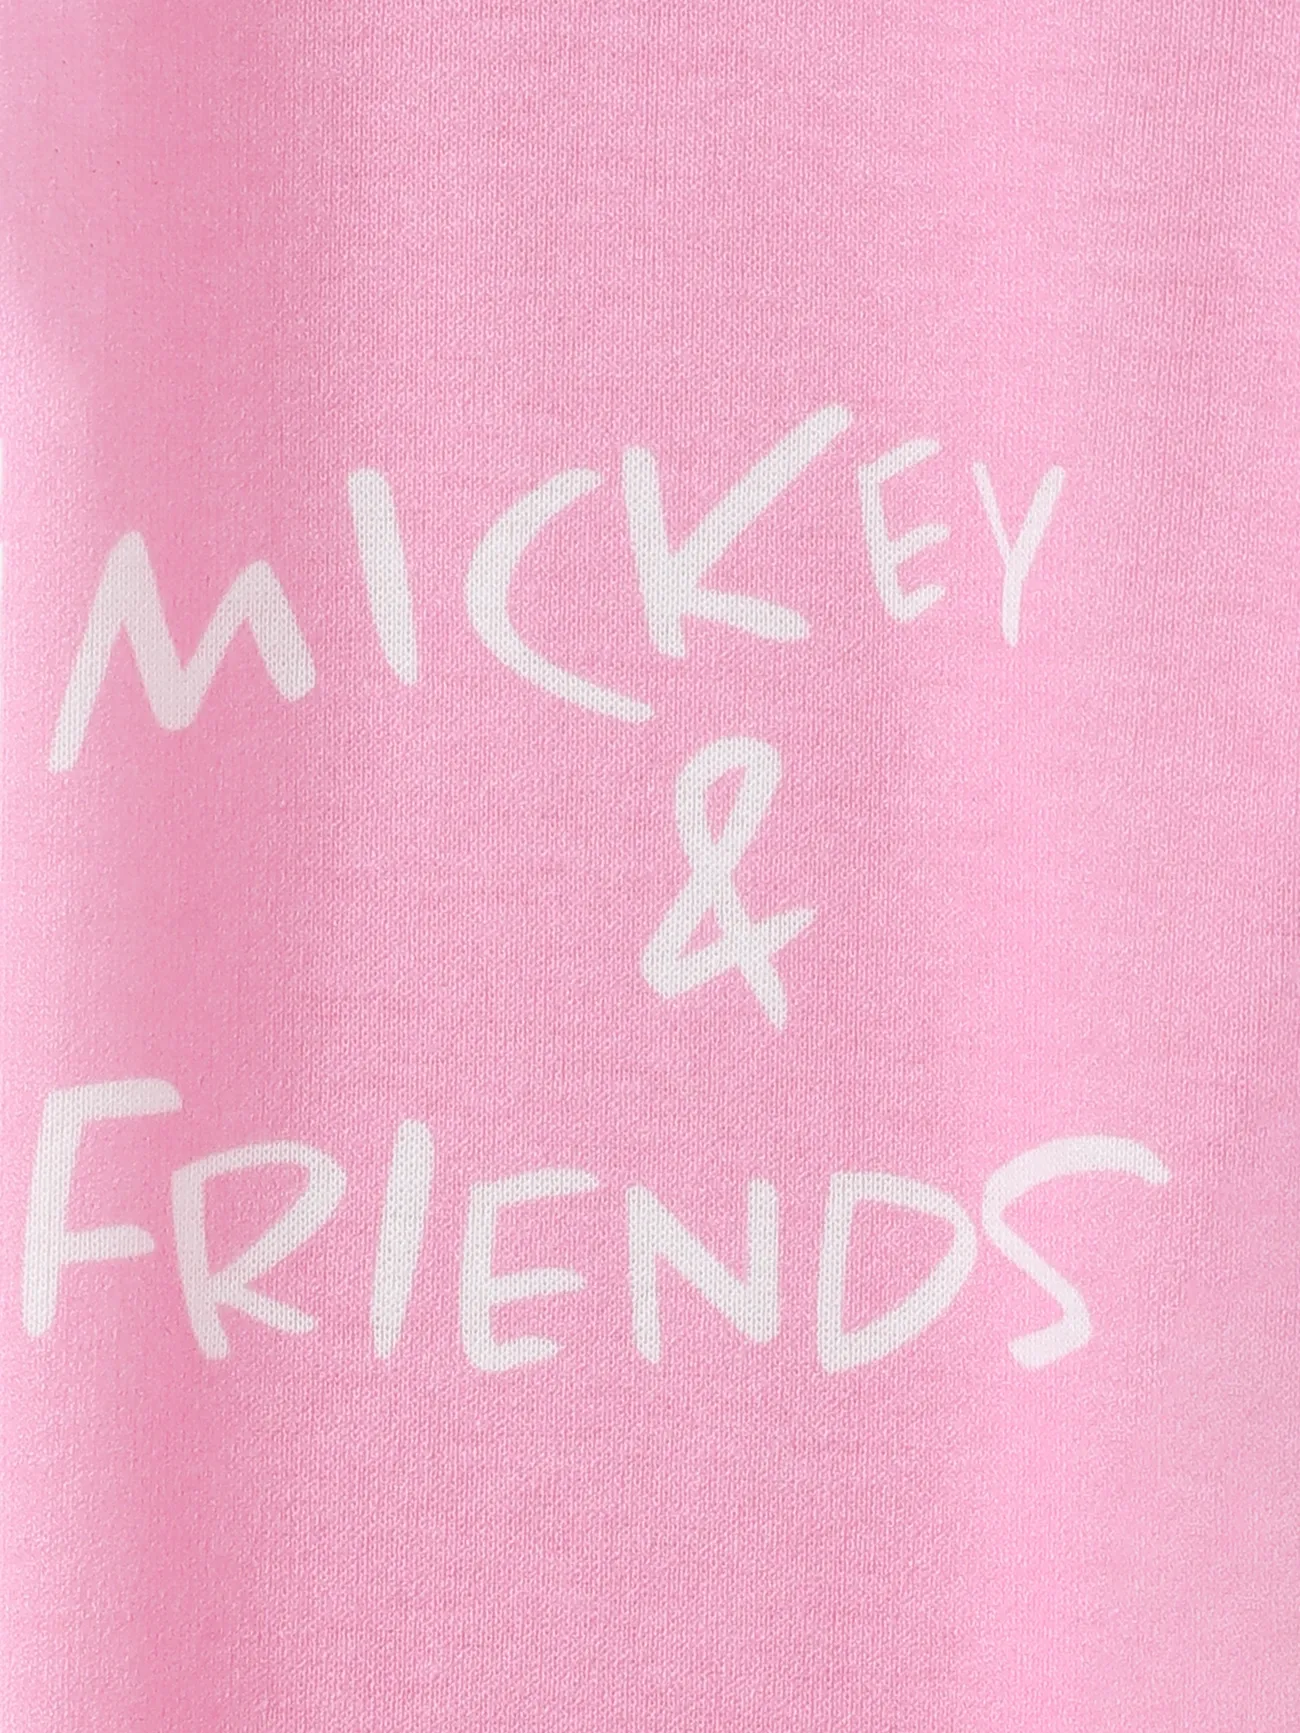 Disney Mickey and Friends Niño pequeño Chica Infantil Leggings / Ropa ajustada / Bootcut Rosado big image 1